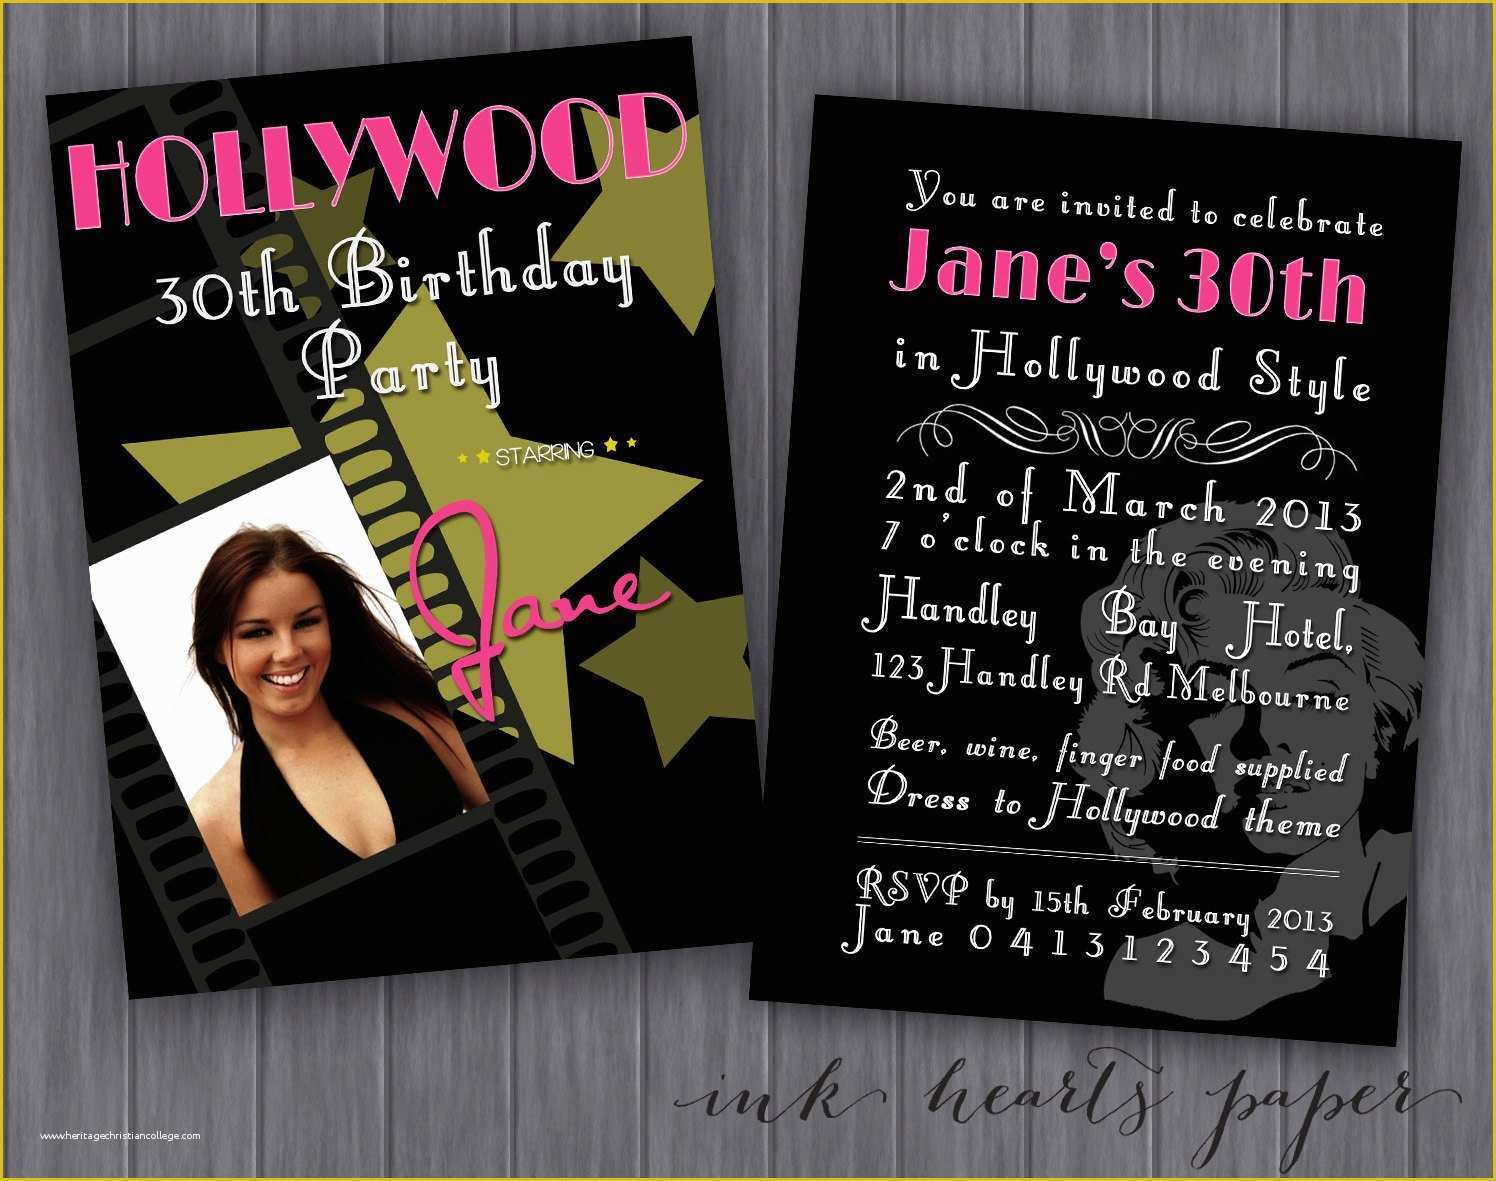 Hollywood themed Invitations Free Templates Of Diy Printable Hollywood theme Birthday Party Invitation